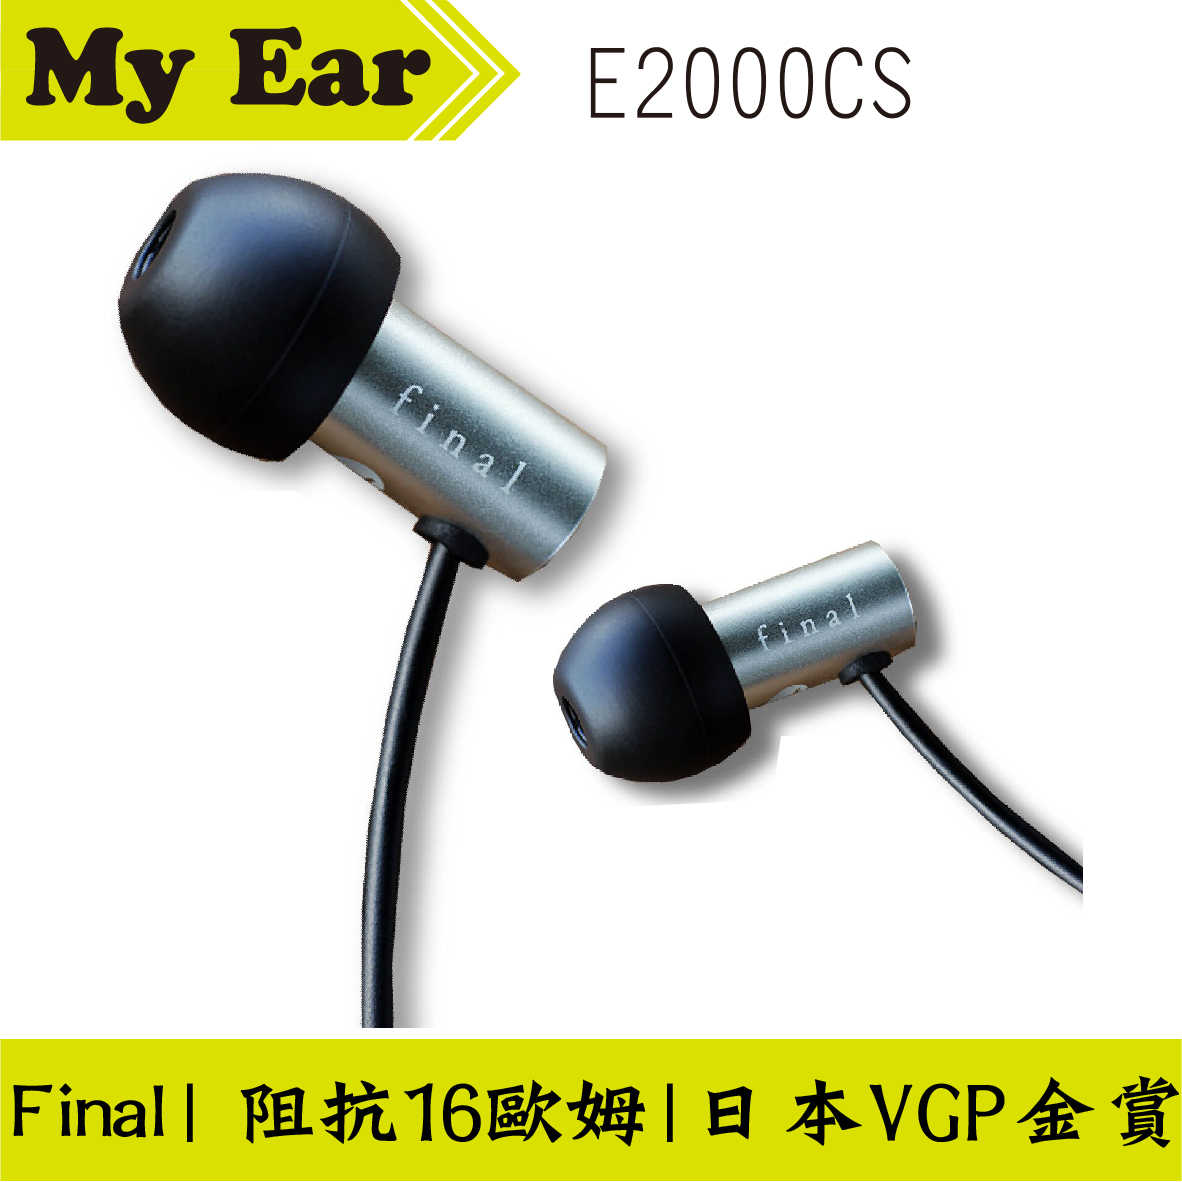 Final E2000C E2000CS 入耳式耳機 黑色 VGP金賞 | My Ear 耳機專門店